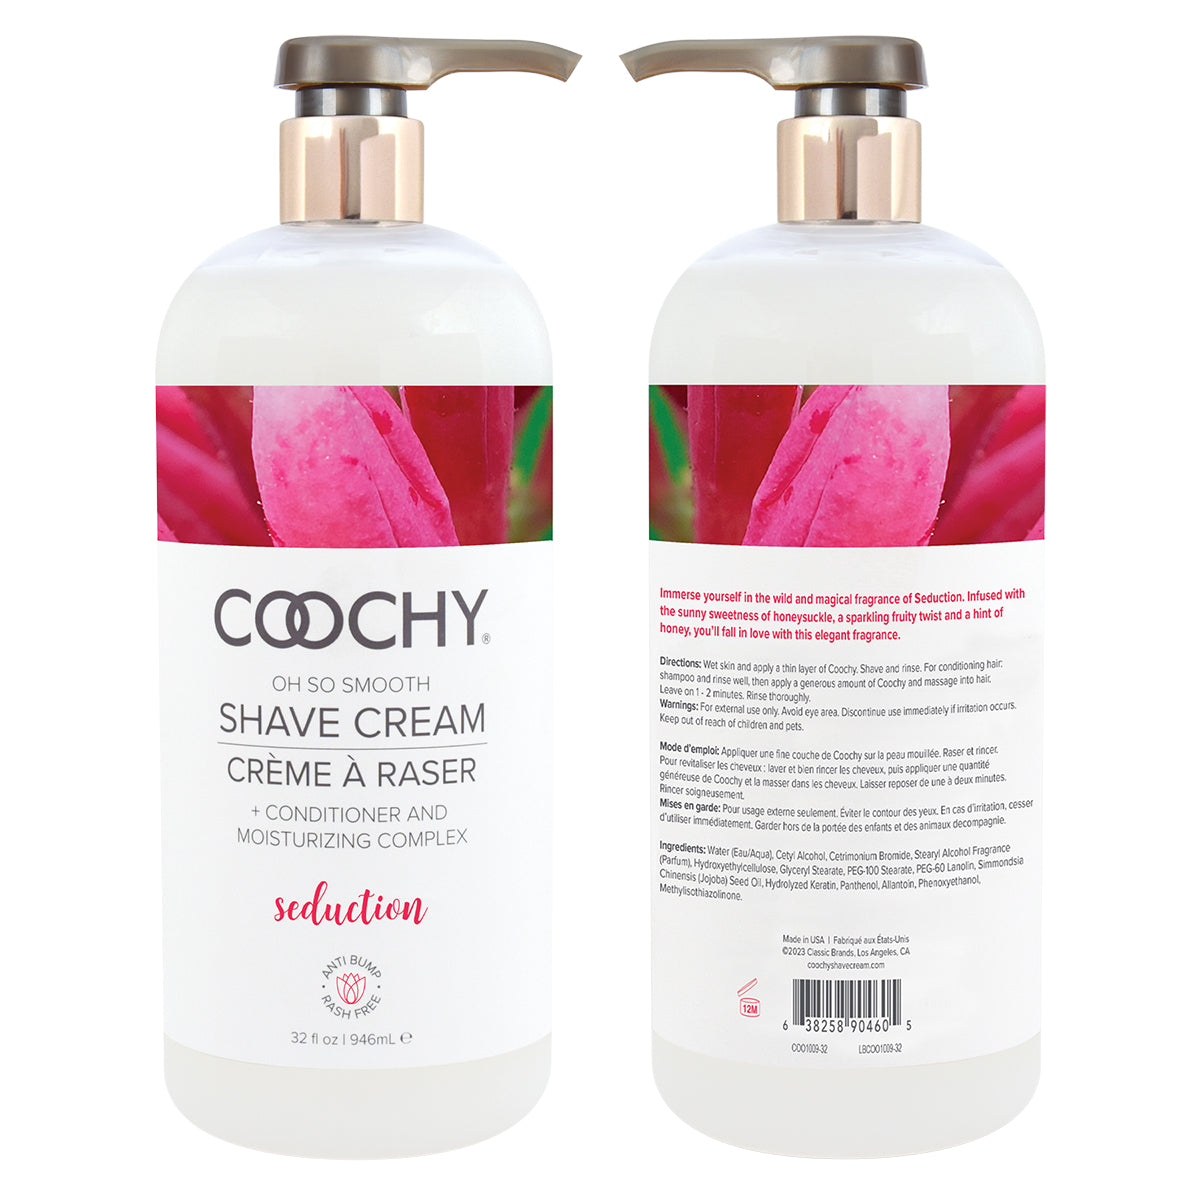 Coochy Shave Cream 32oz - Seduction